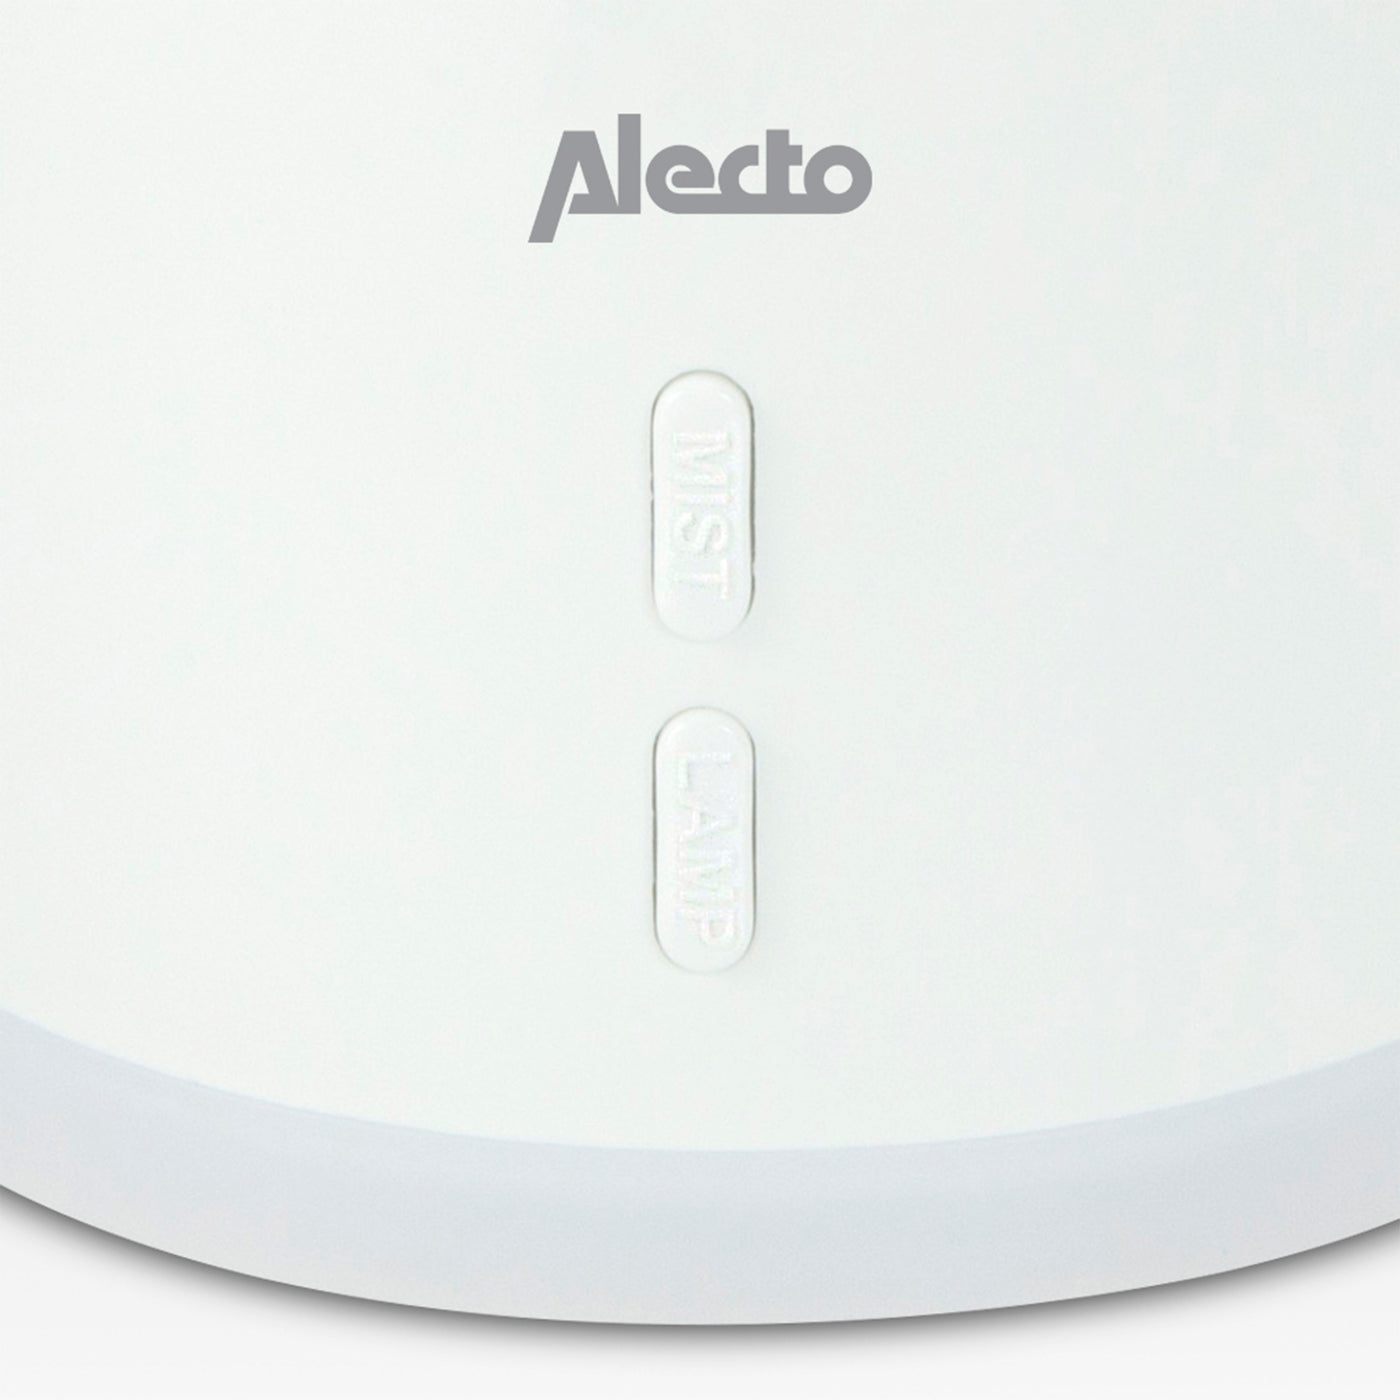 Alecto BC-24 - Ultrasone luchtbevochtiger voor de juiste luchtvochtigheid, wit